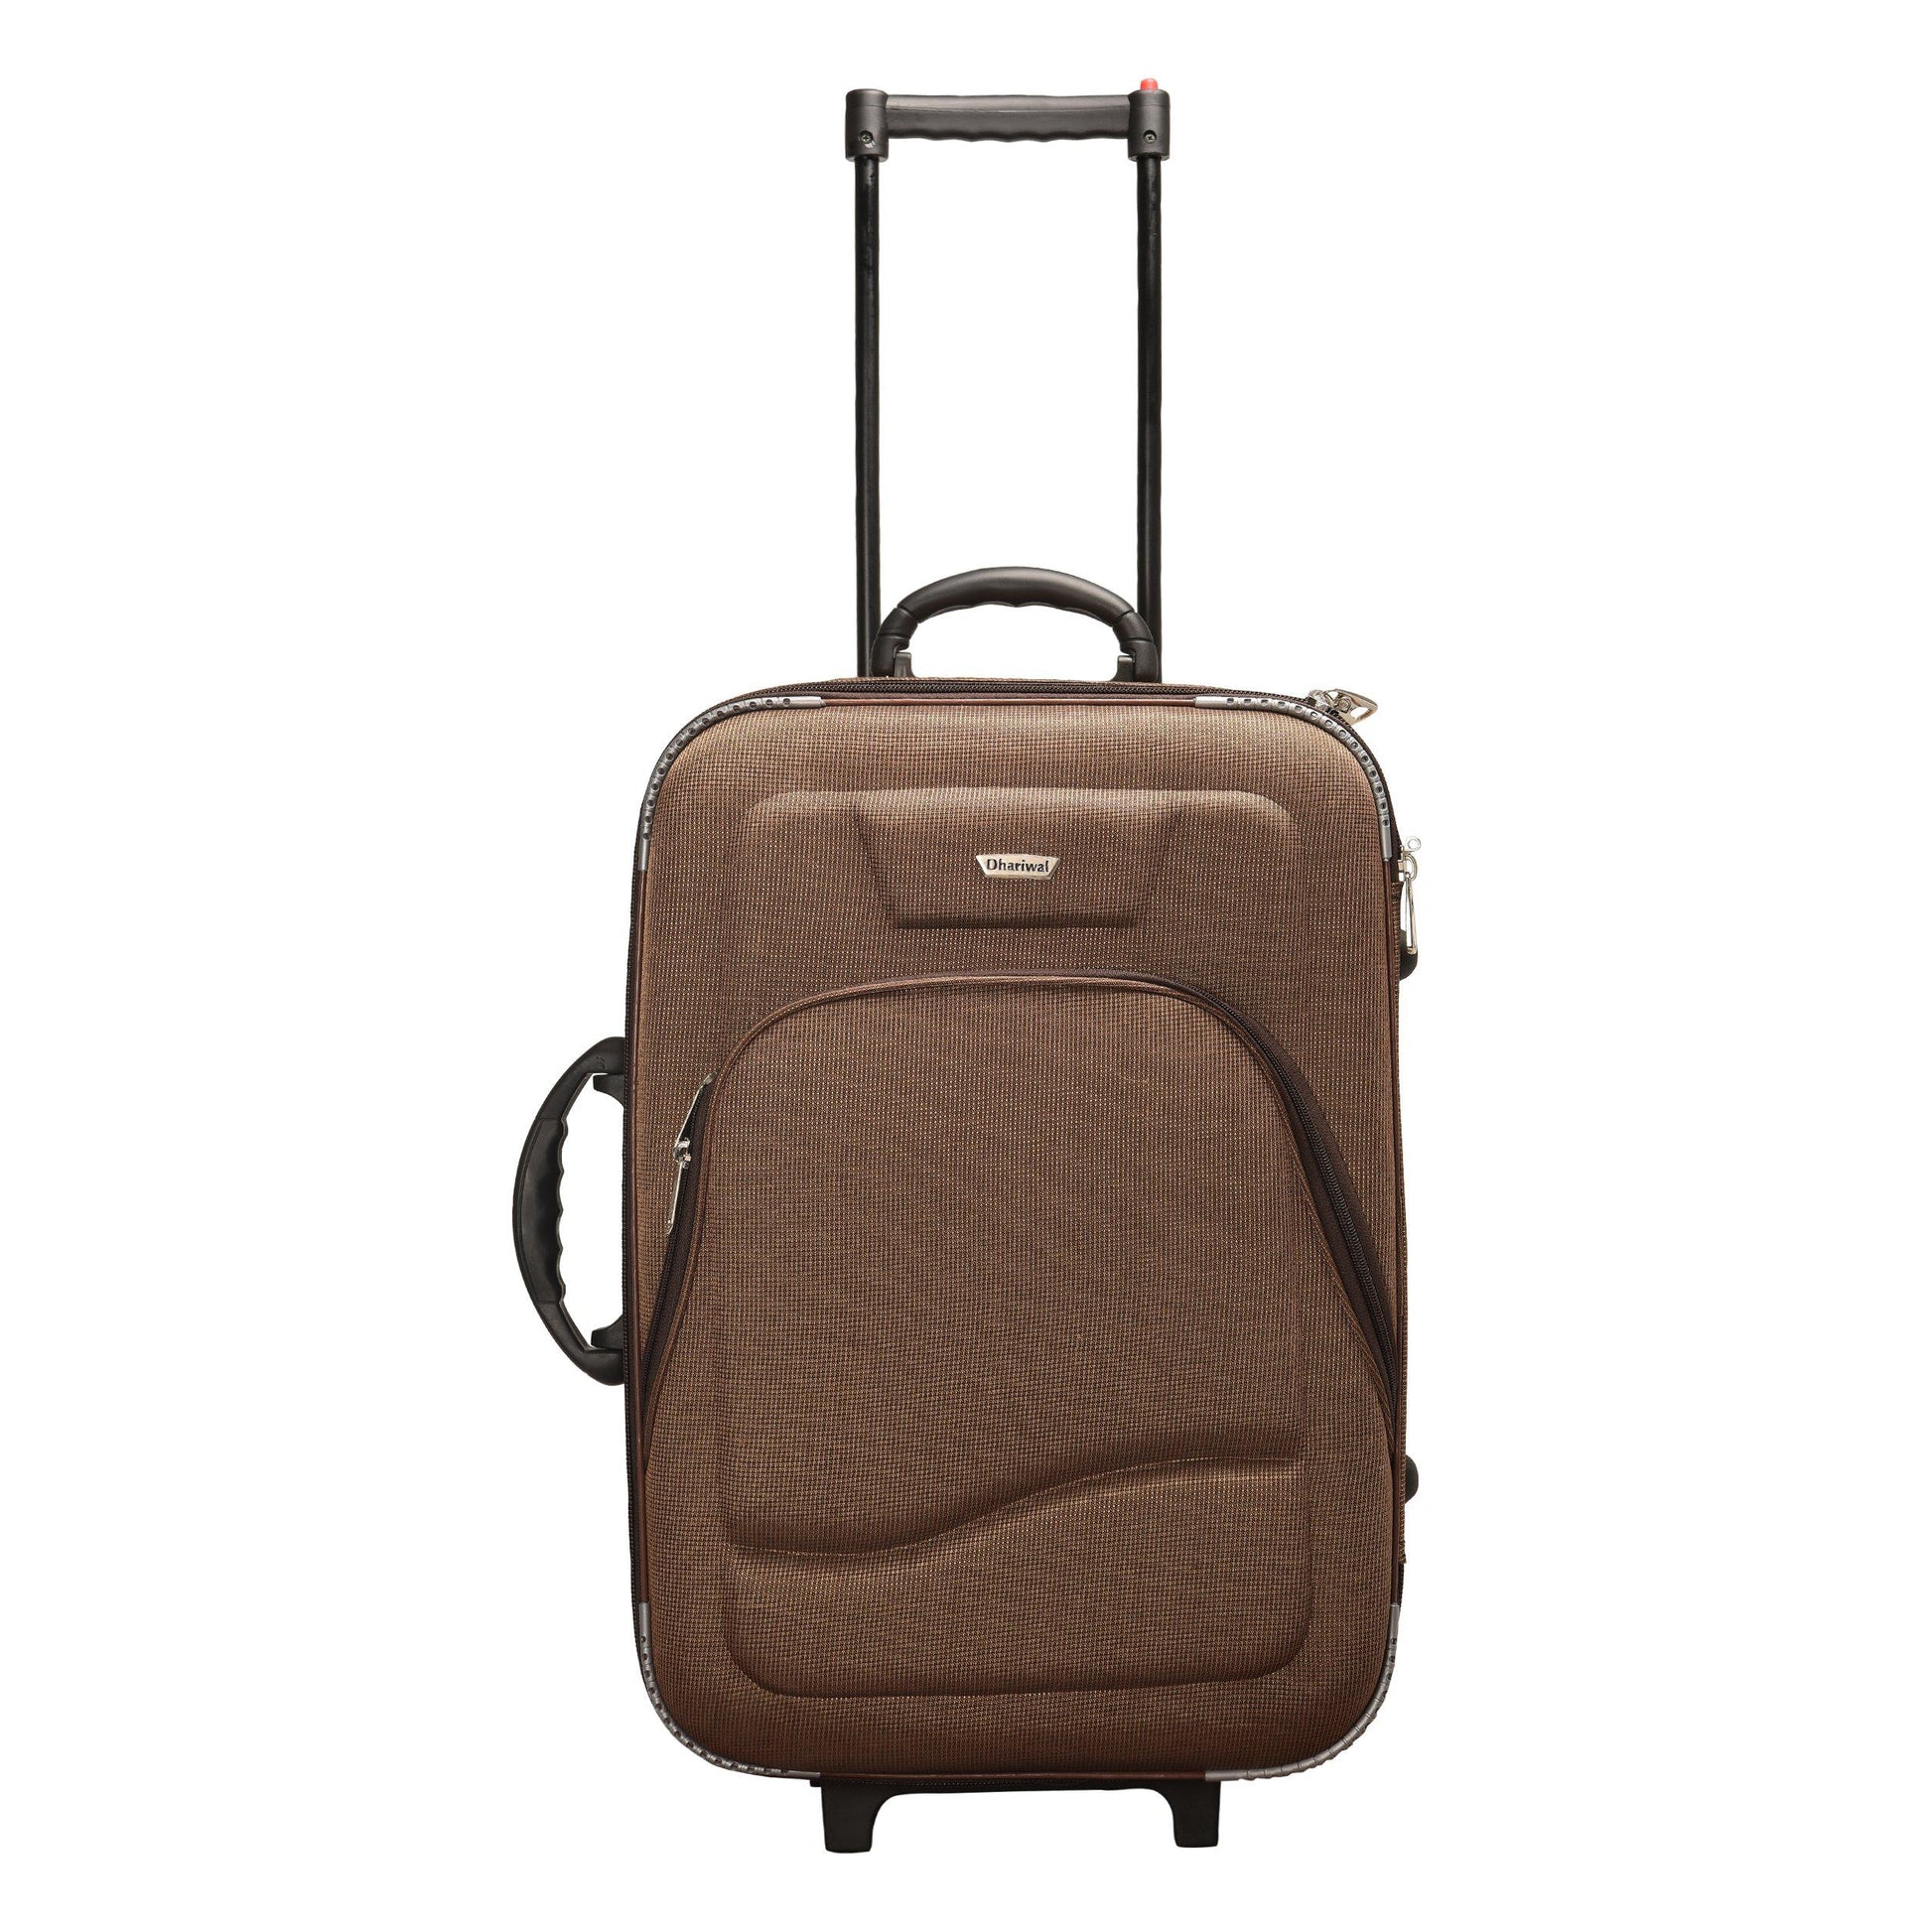 20 inch Safari Trolley Swift Bag for Travelling